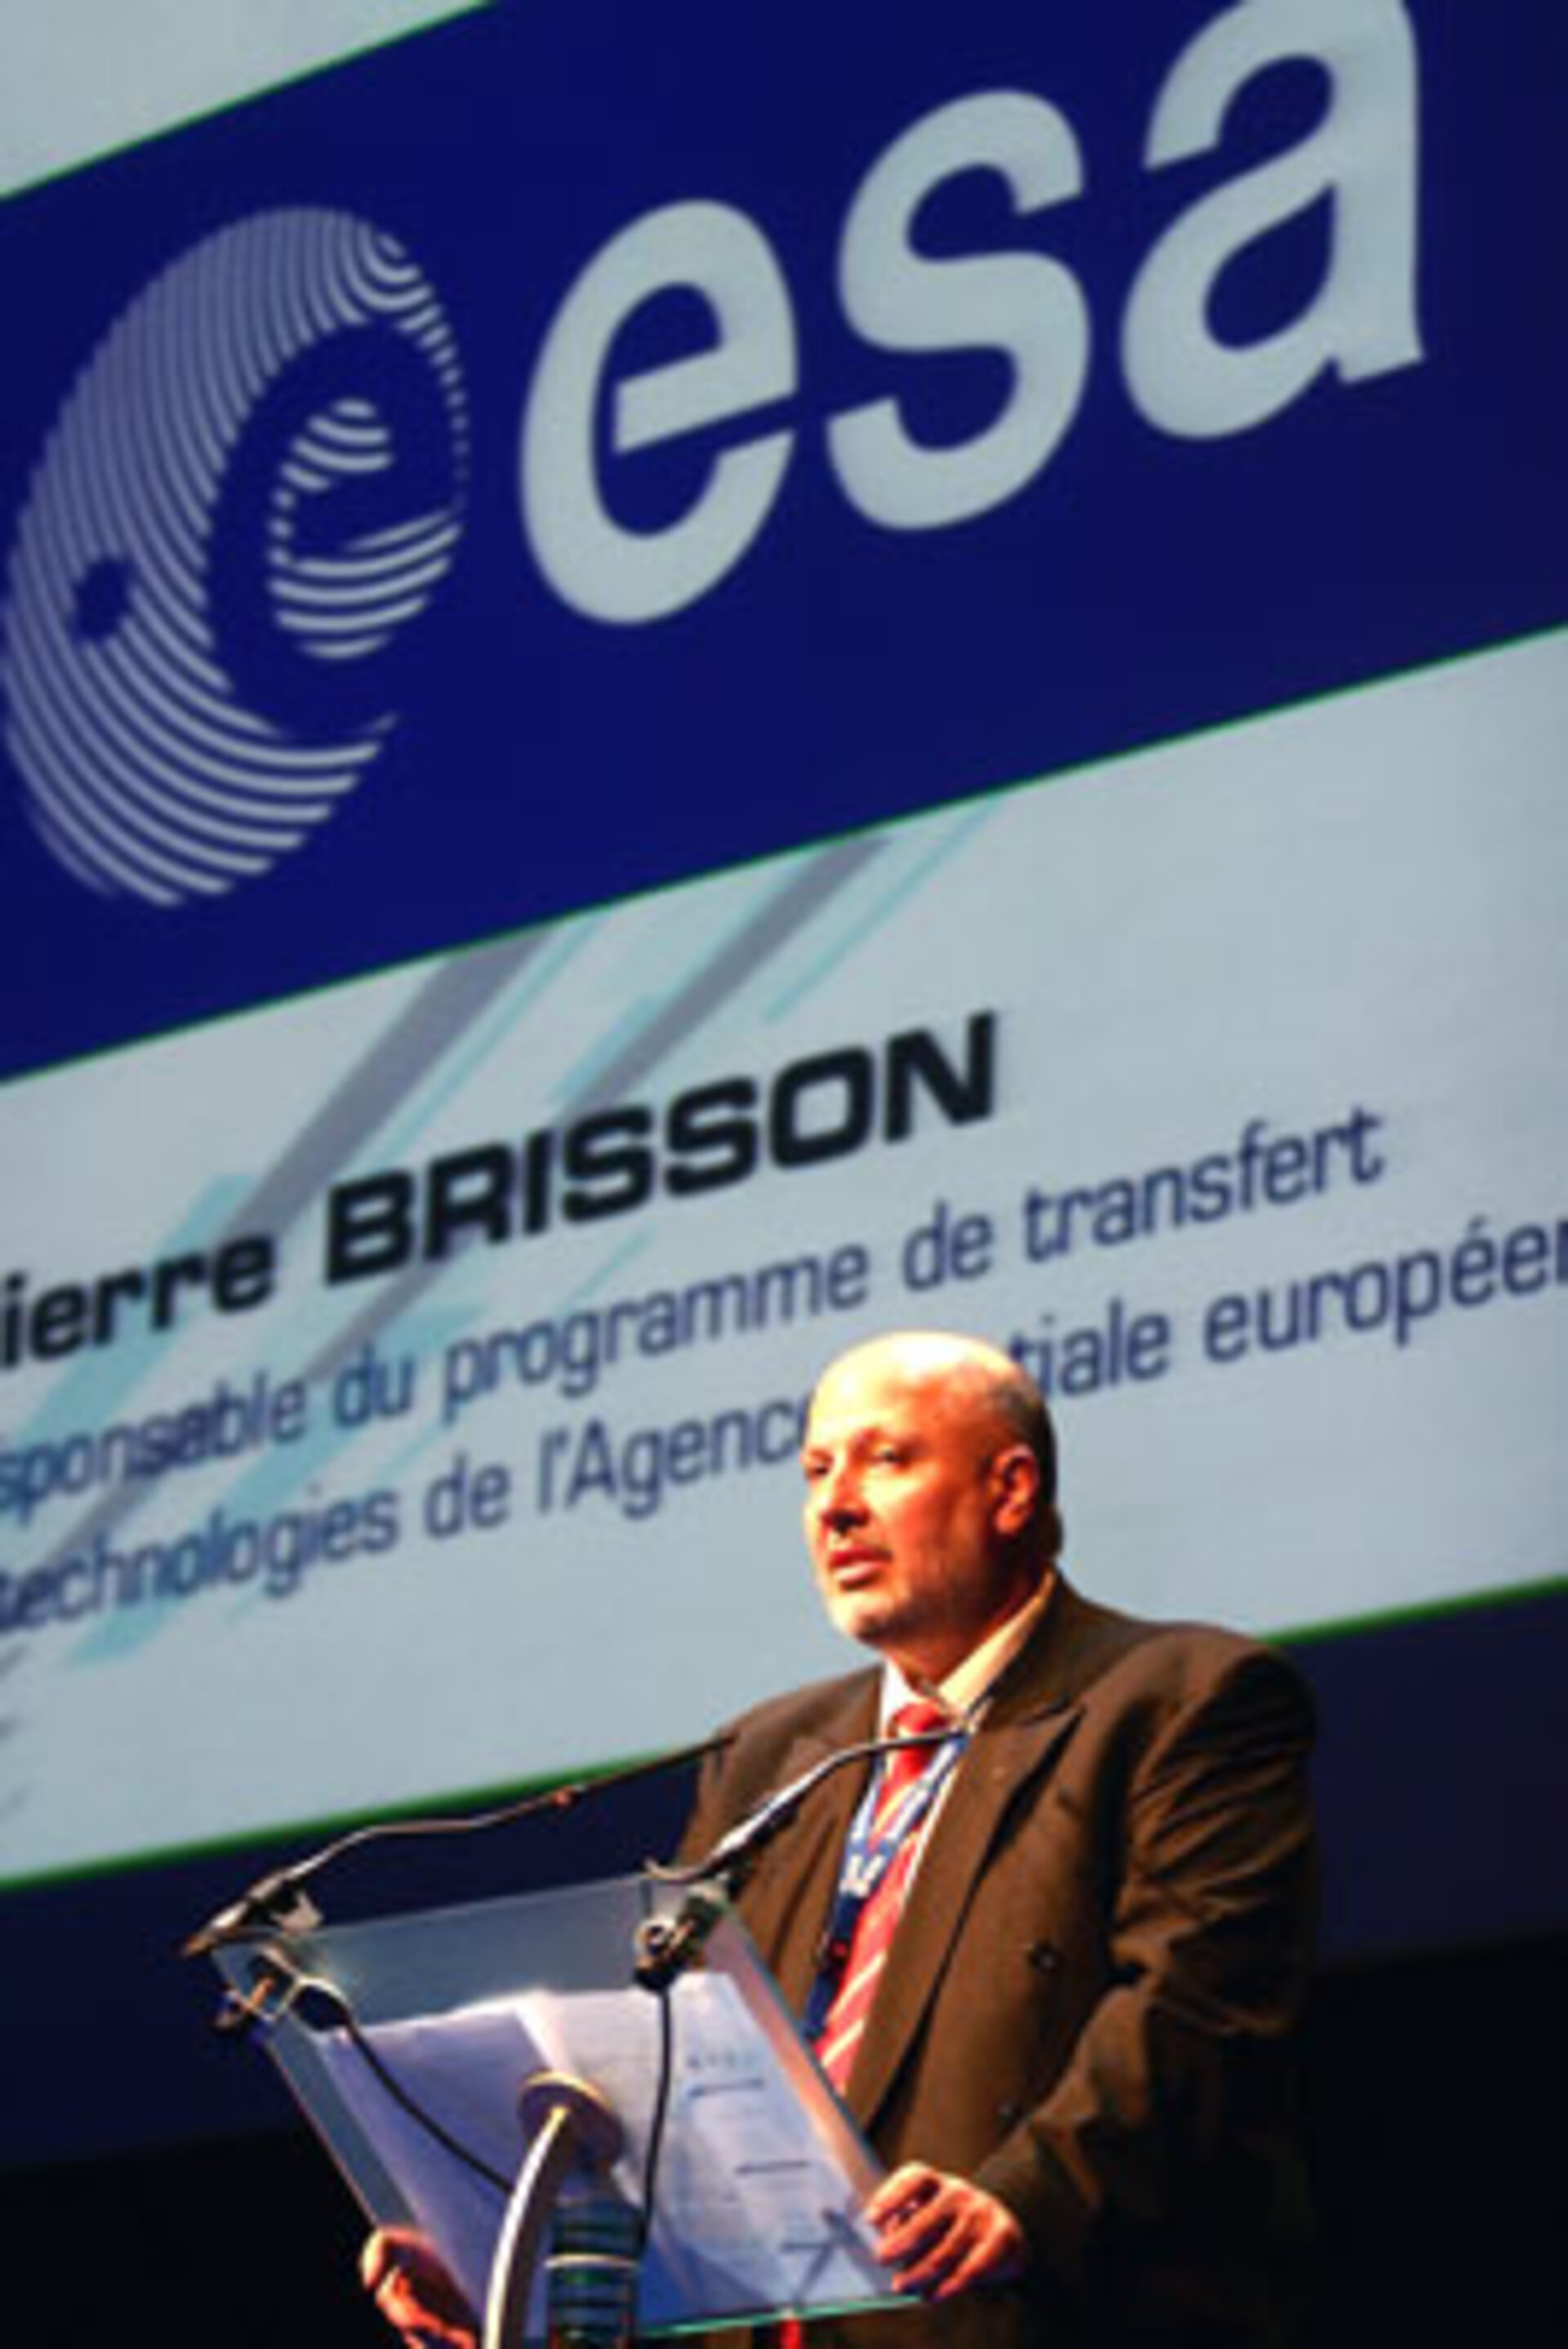 Pierre Brisson, ESA, presents space technologies used